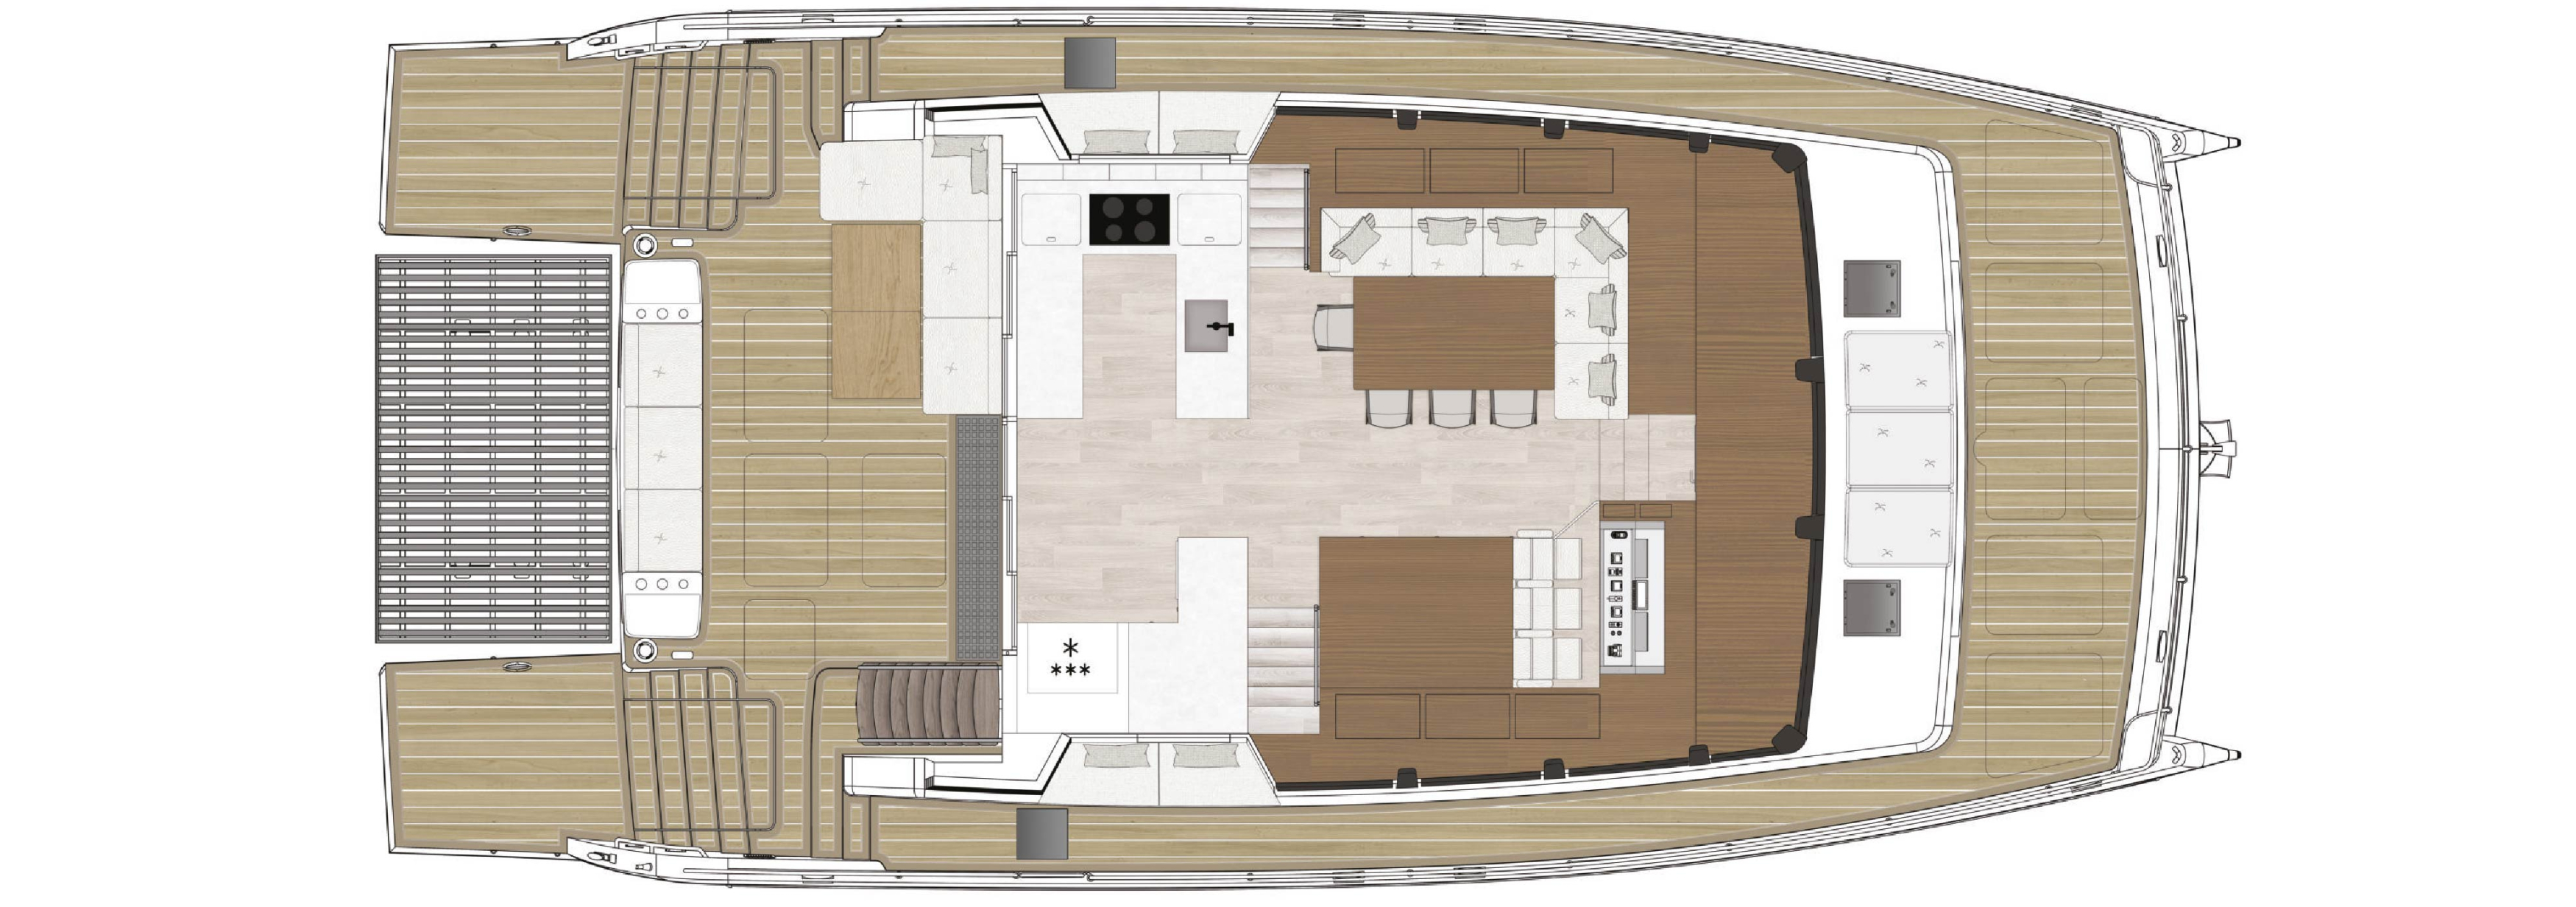 Yacht main deck plan